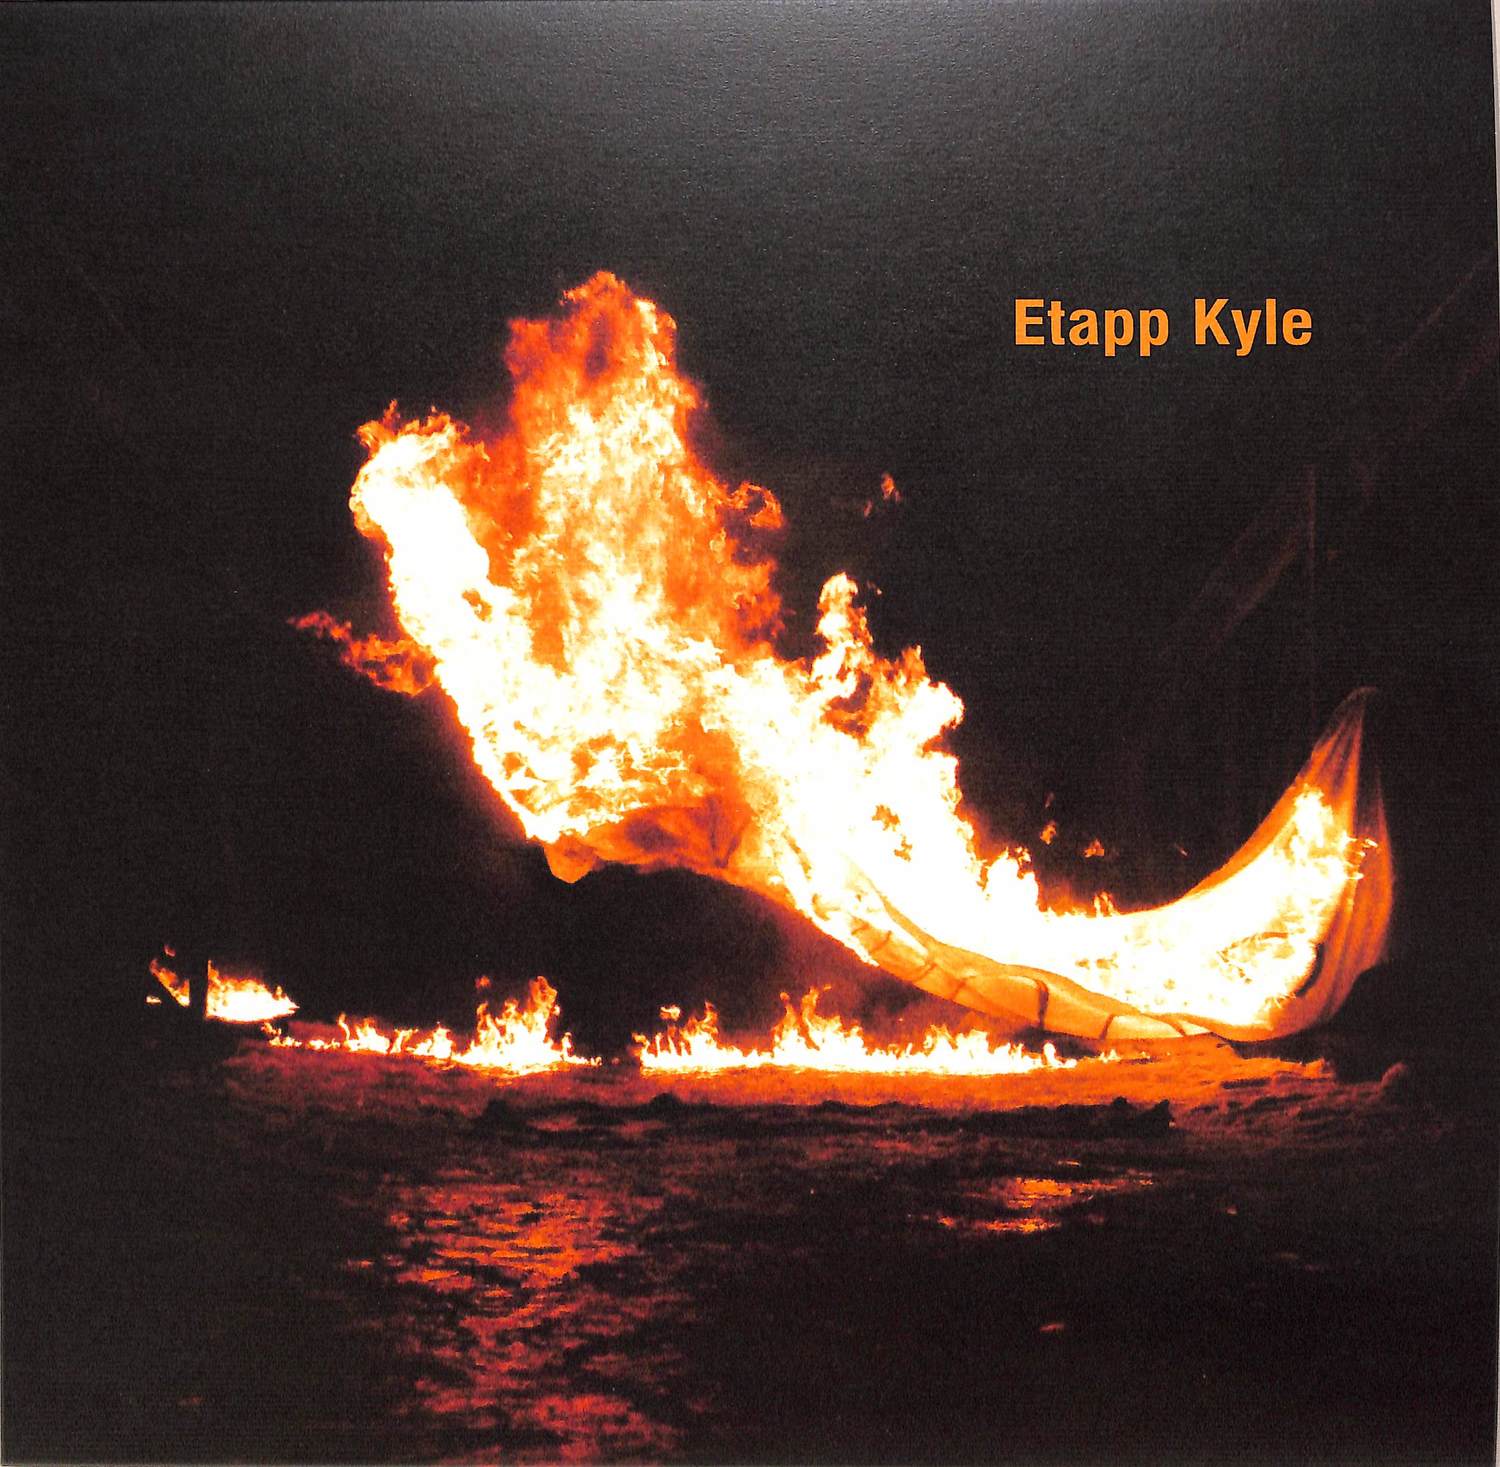 Etapp Kyle - NOLOVE